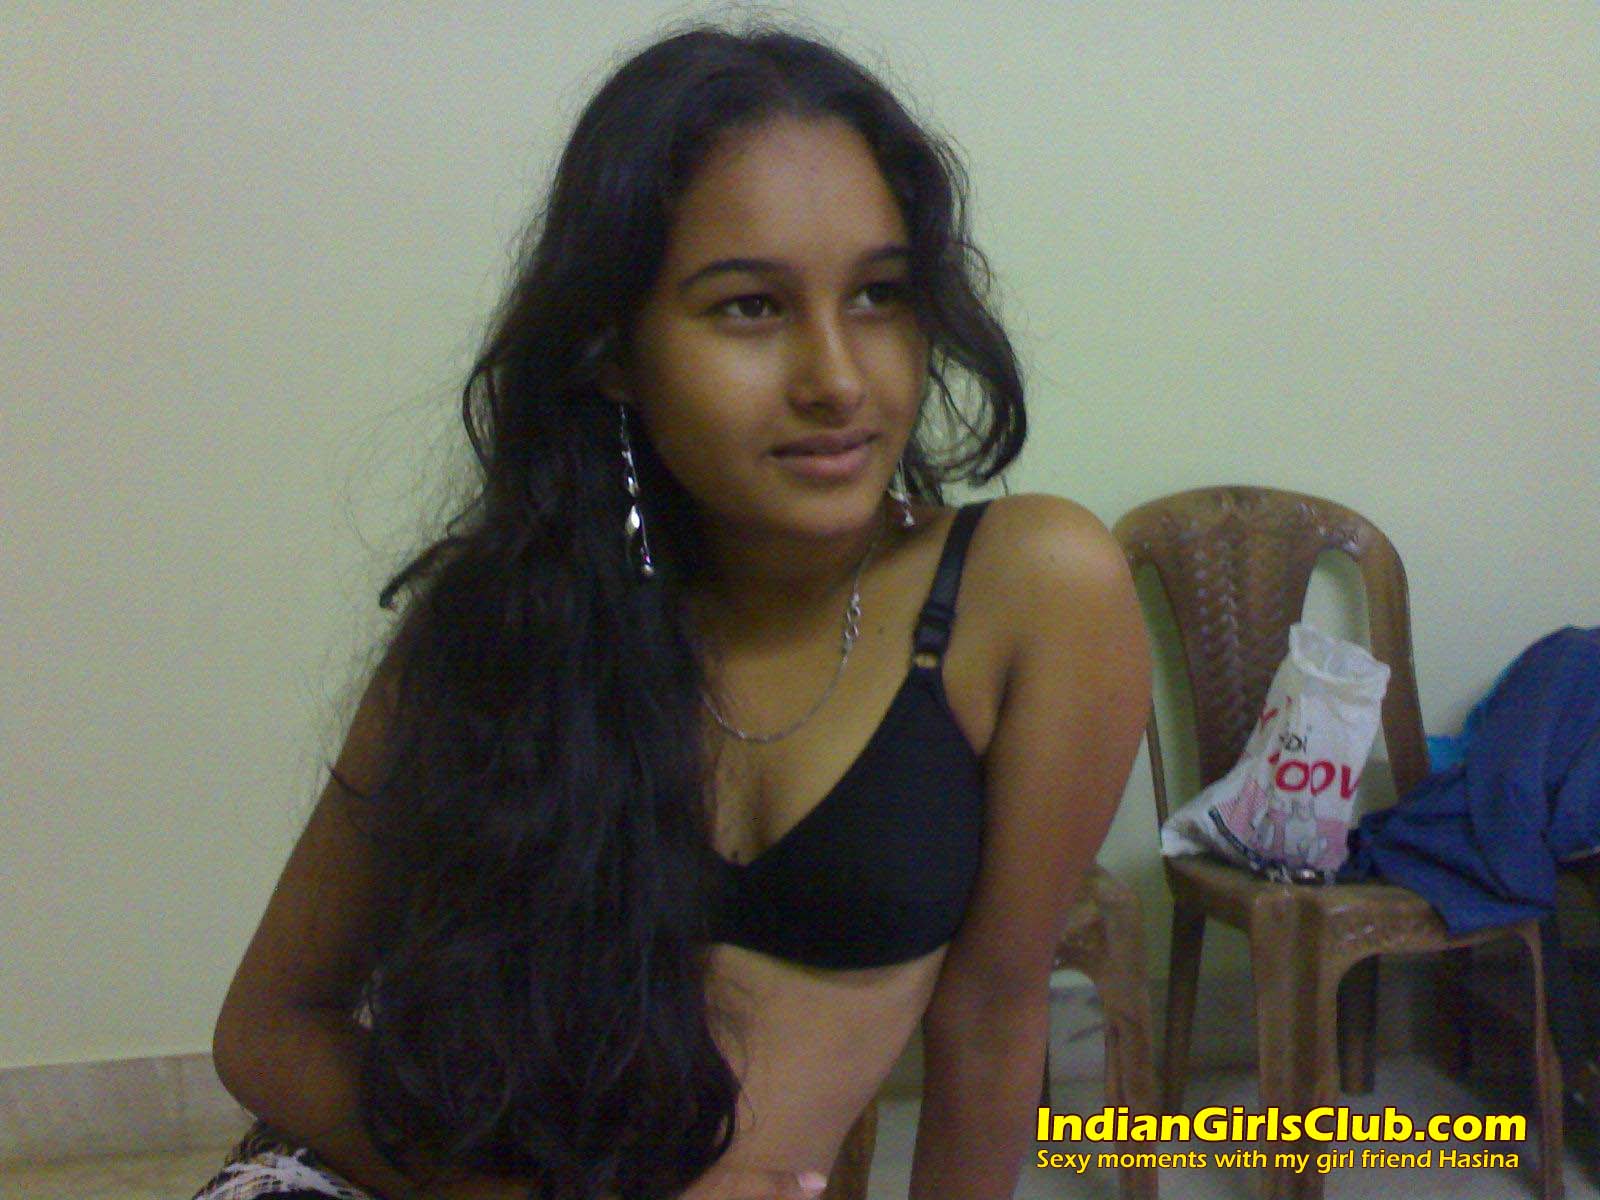 2 indian girlfriends pics - Indian Girls Club image